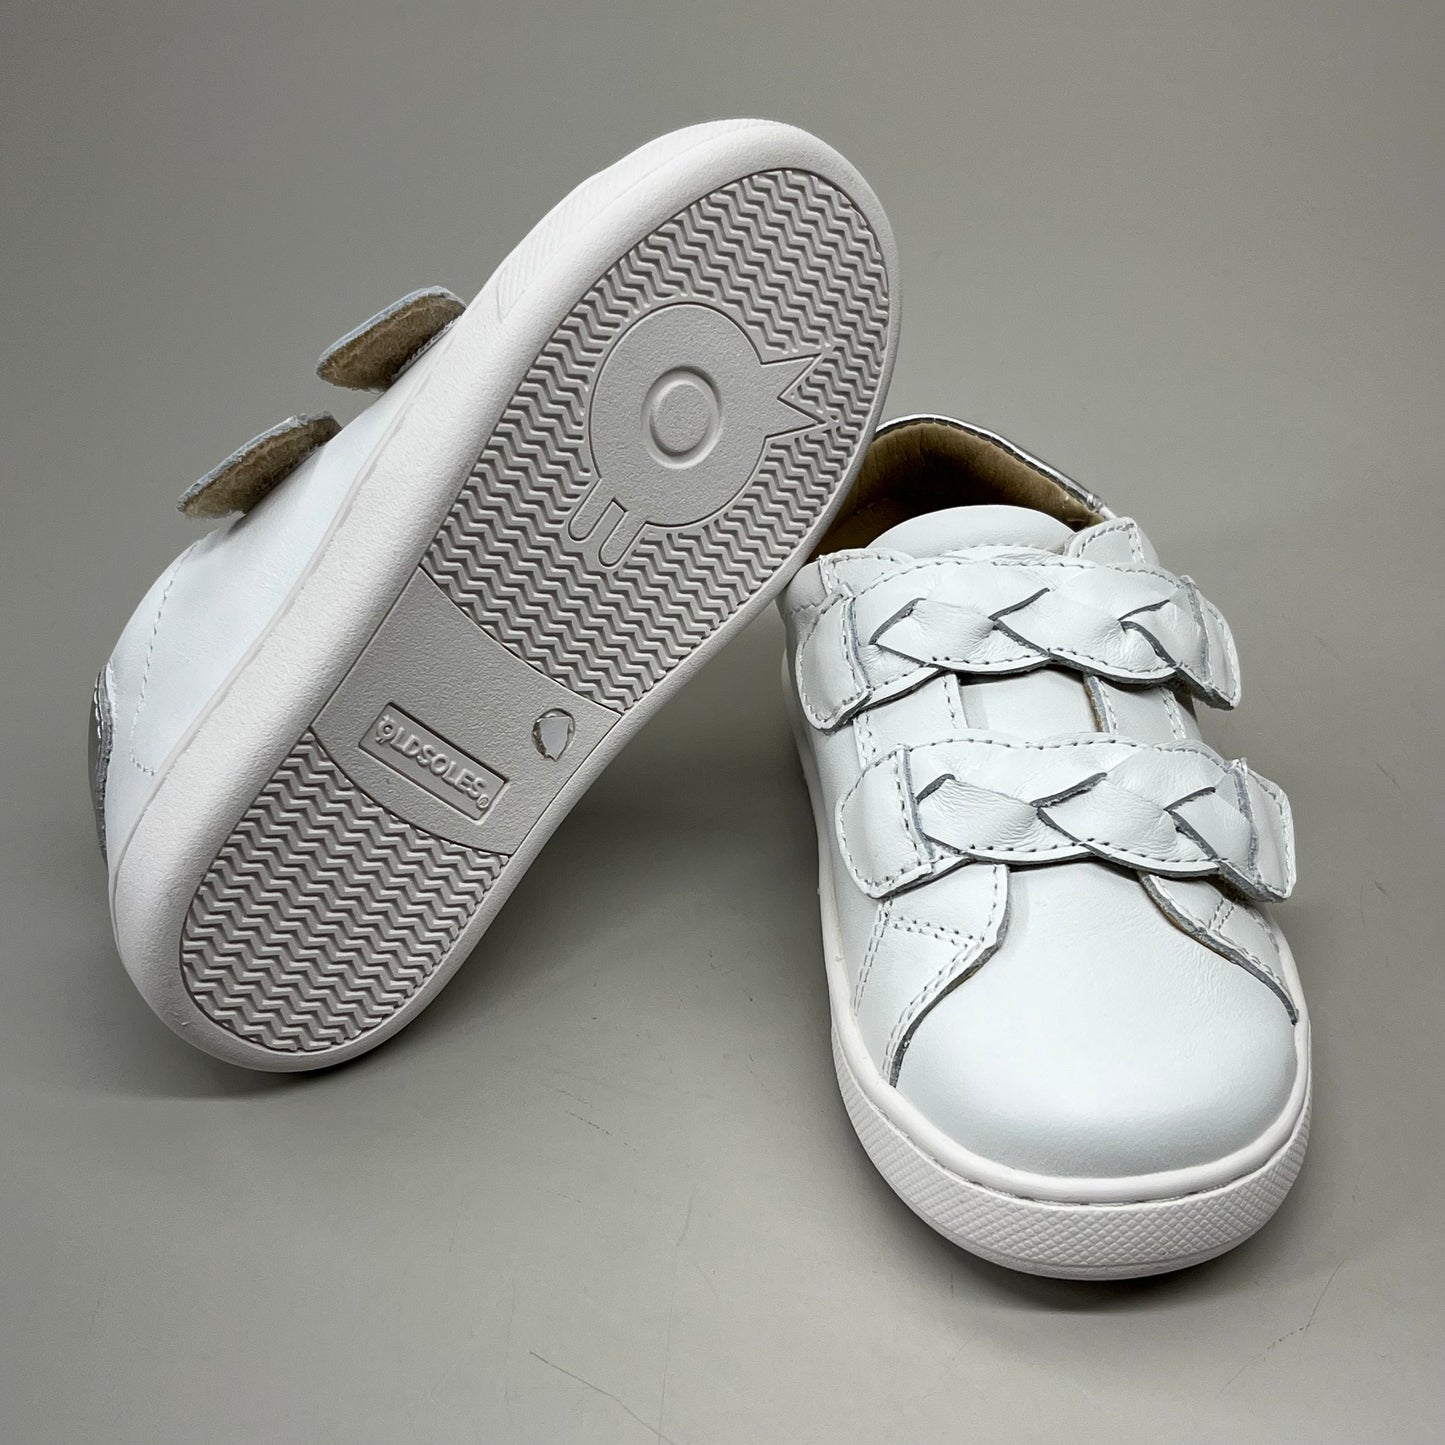 OLD SOLES Baby Plats Leather Shoe Sz 8 EU 24 Snow / Silver #6134